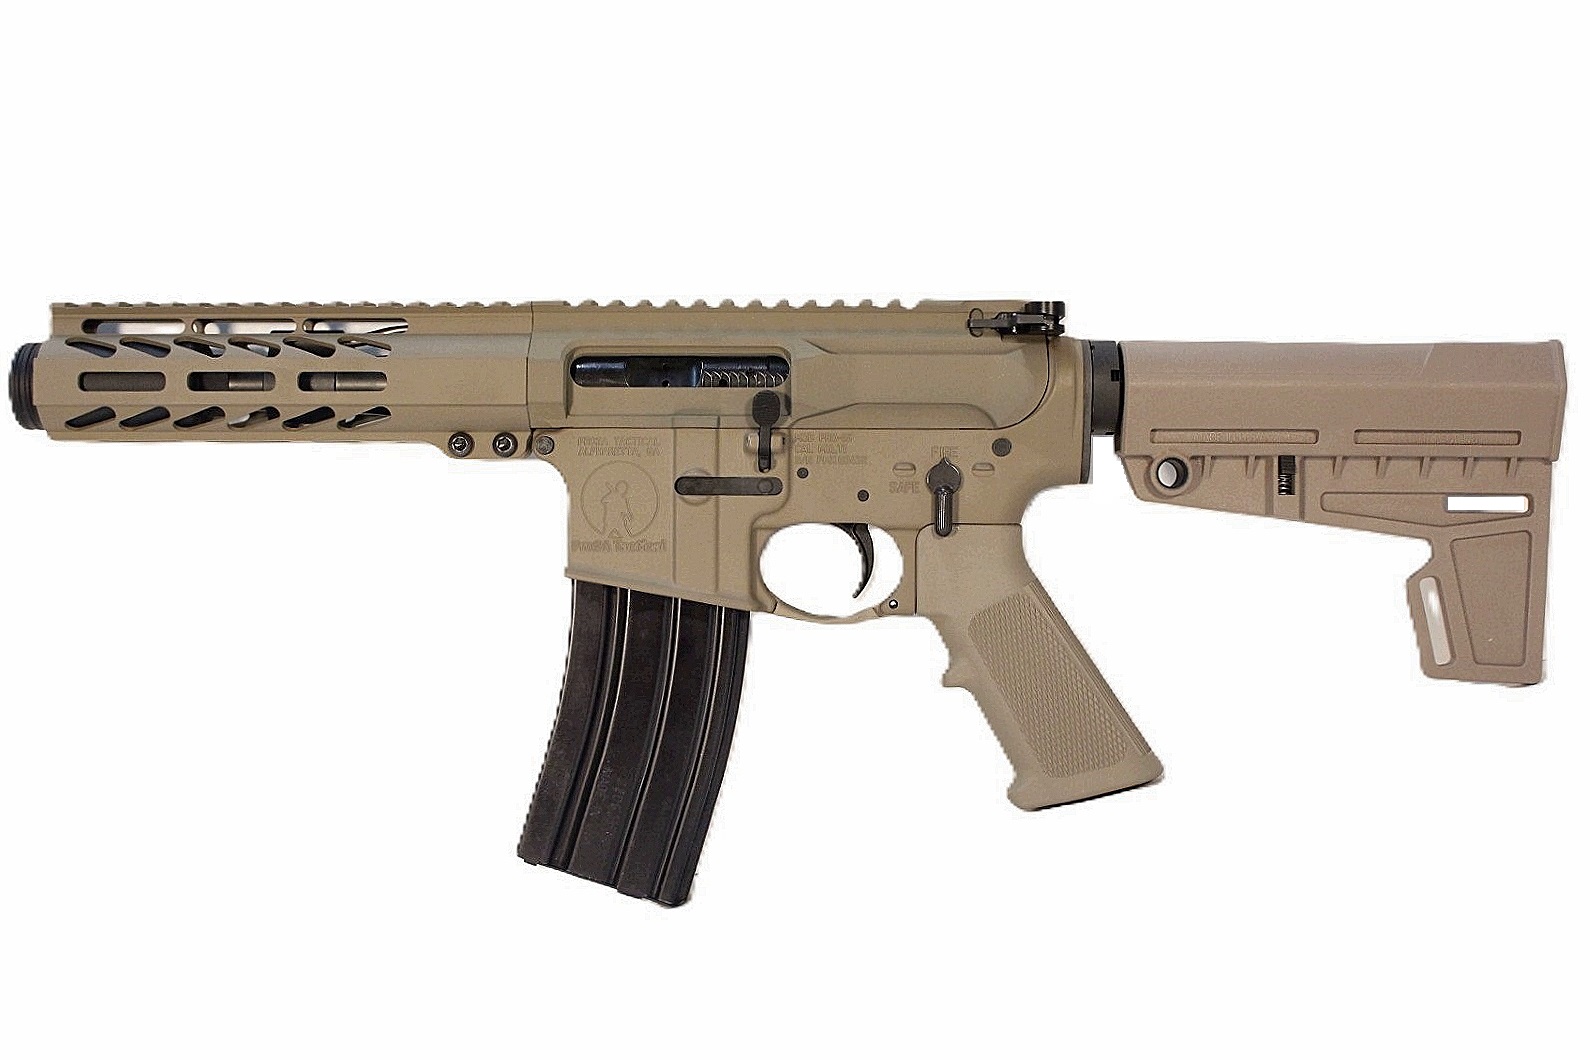 5 inch 300 BLK Pistol | LEFTHAND | FDE